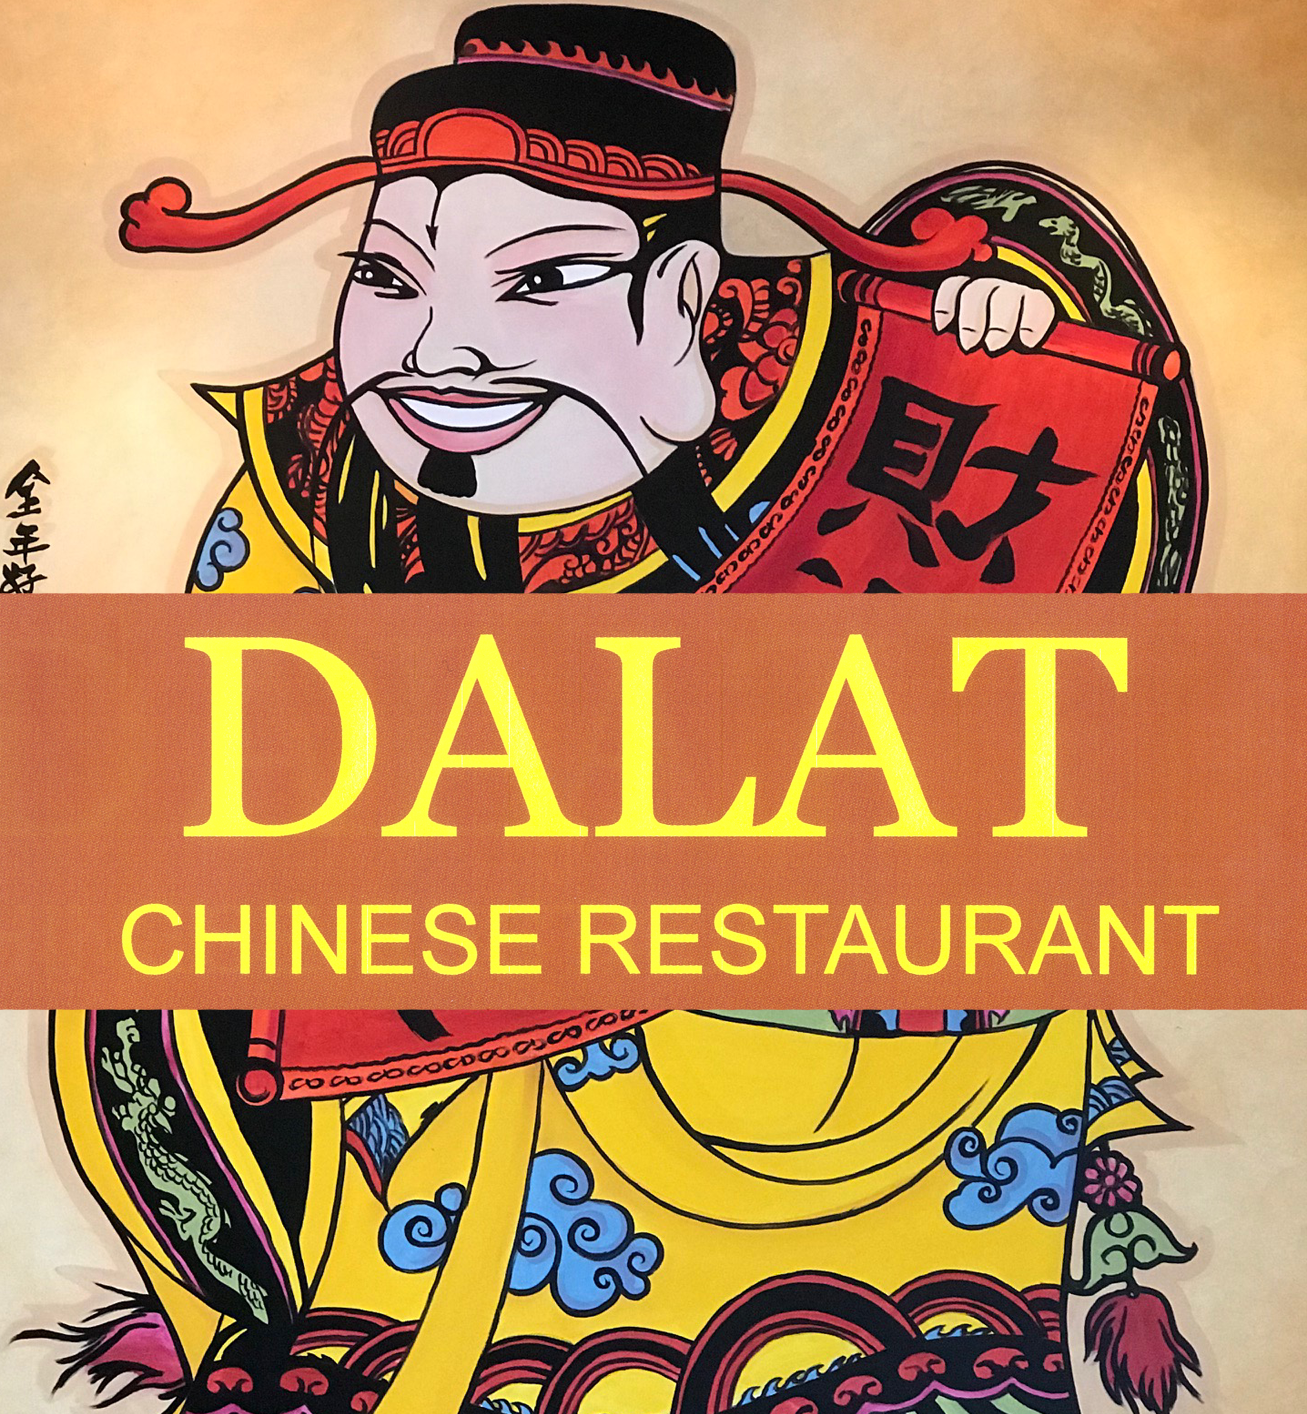 Dalat Restaurant (Taylor Ave)